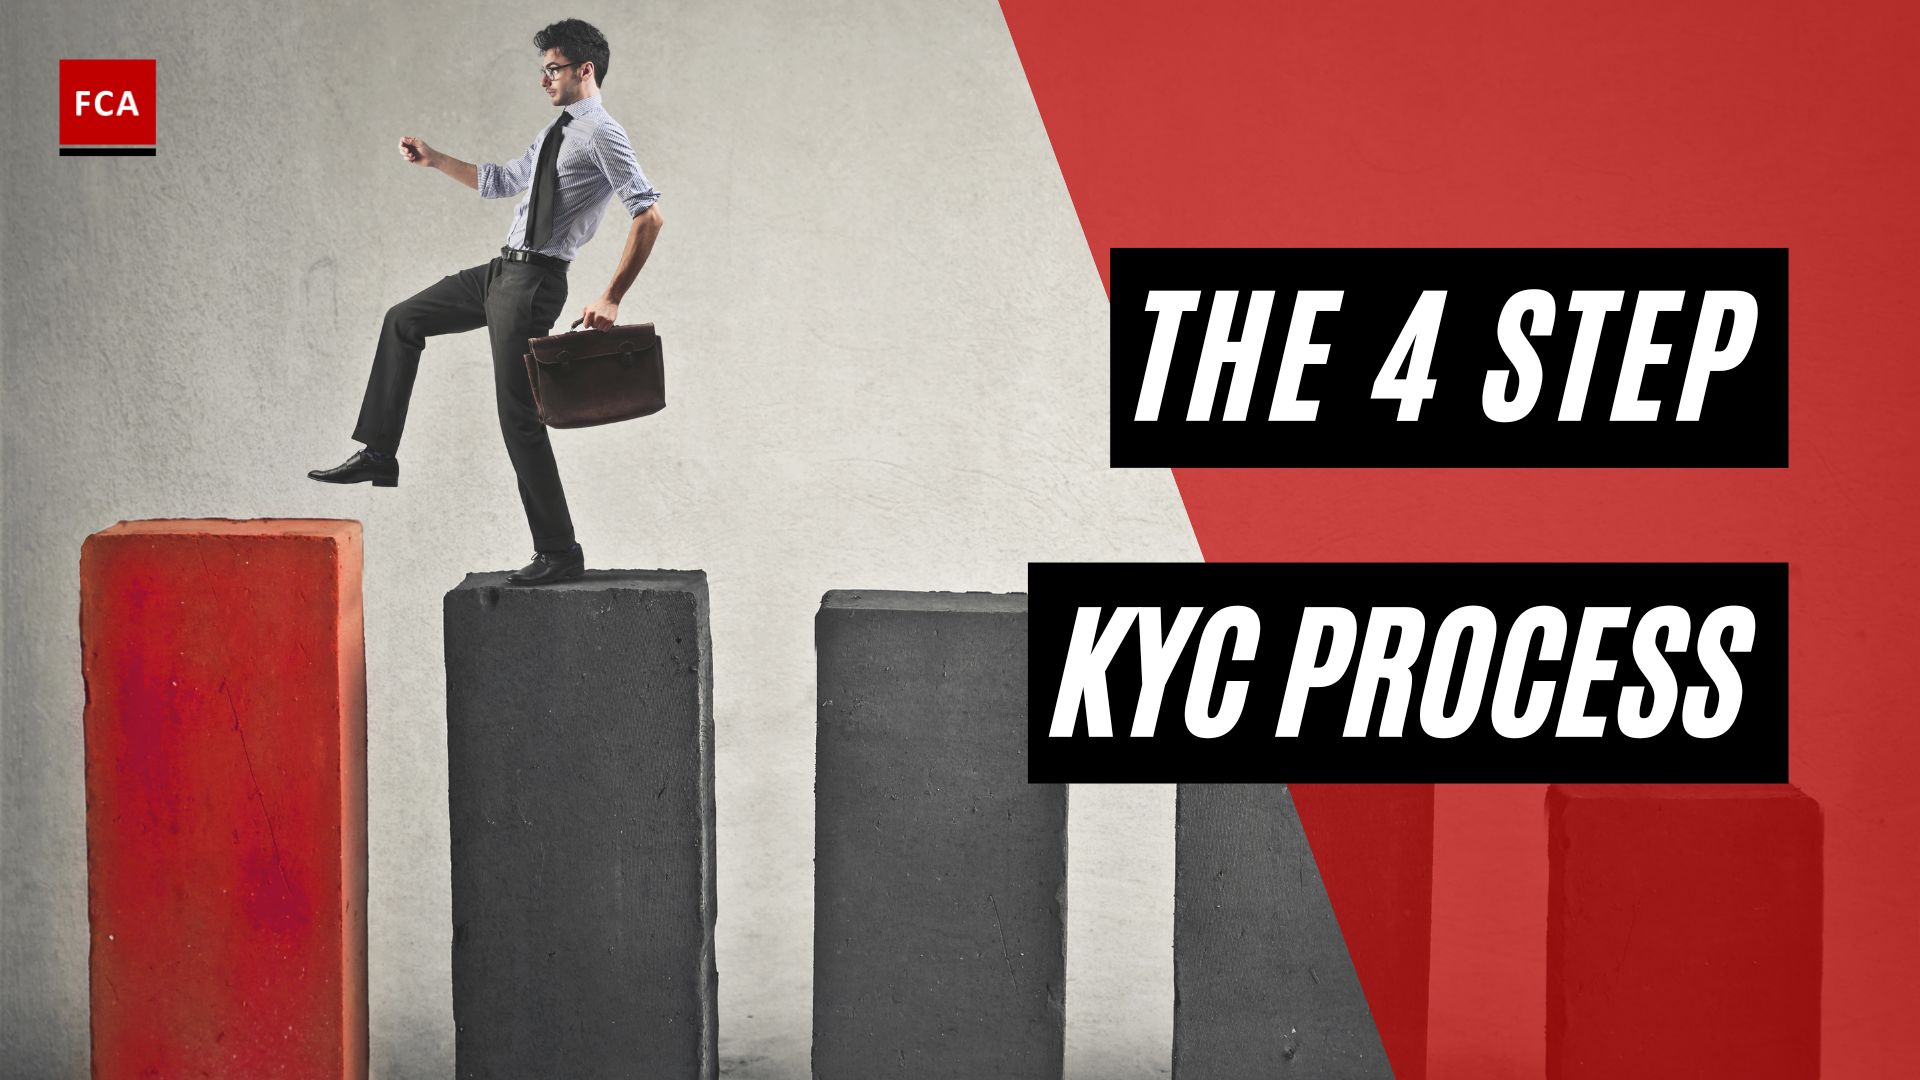 The 4 Step Kyc Process